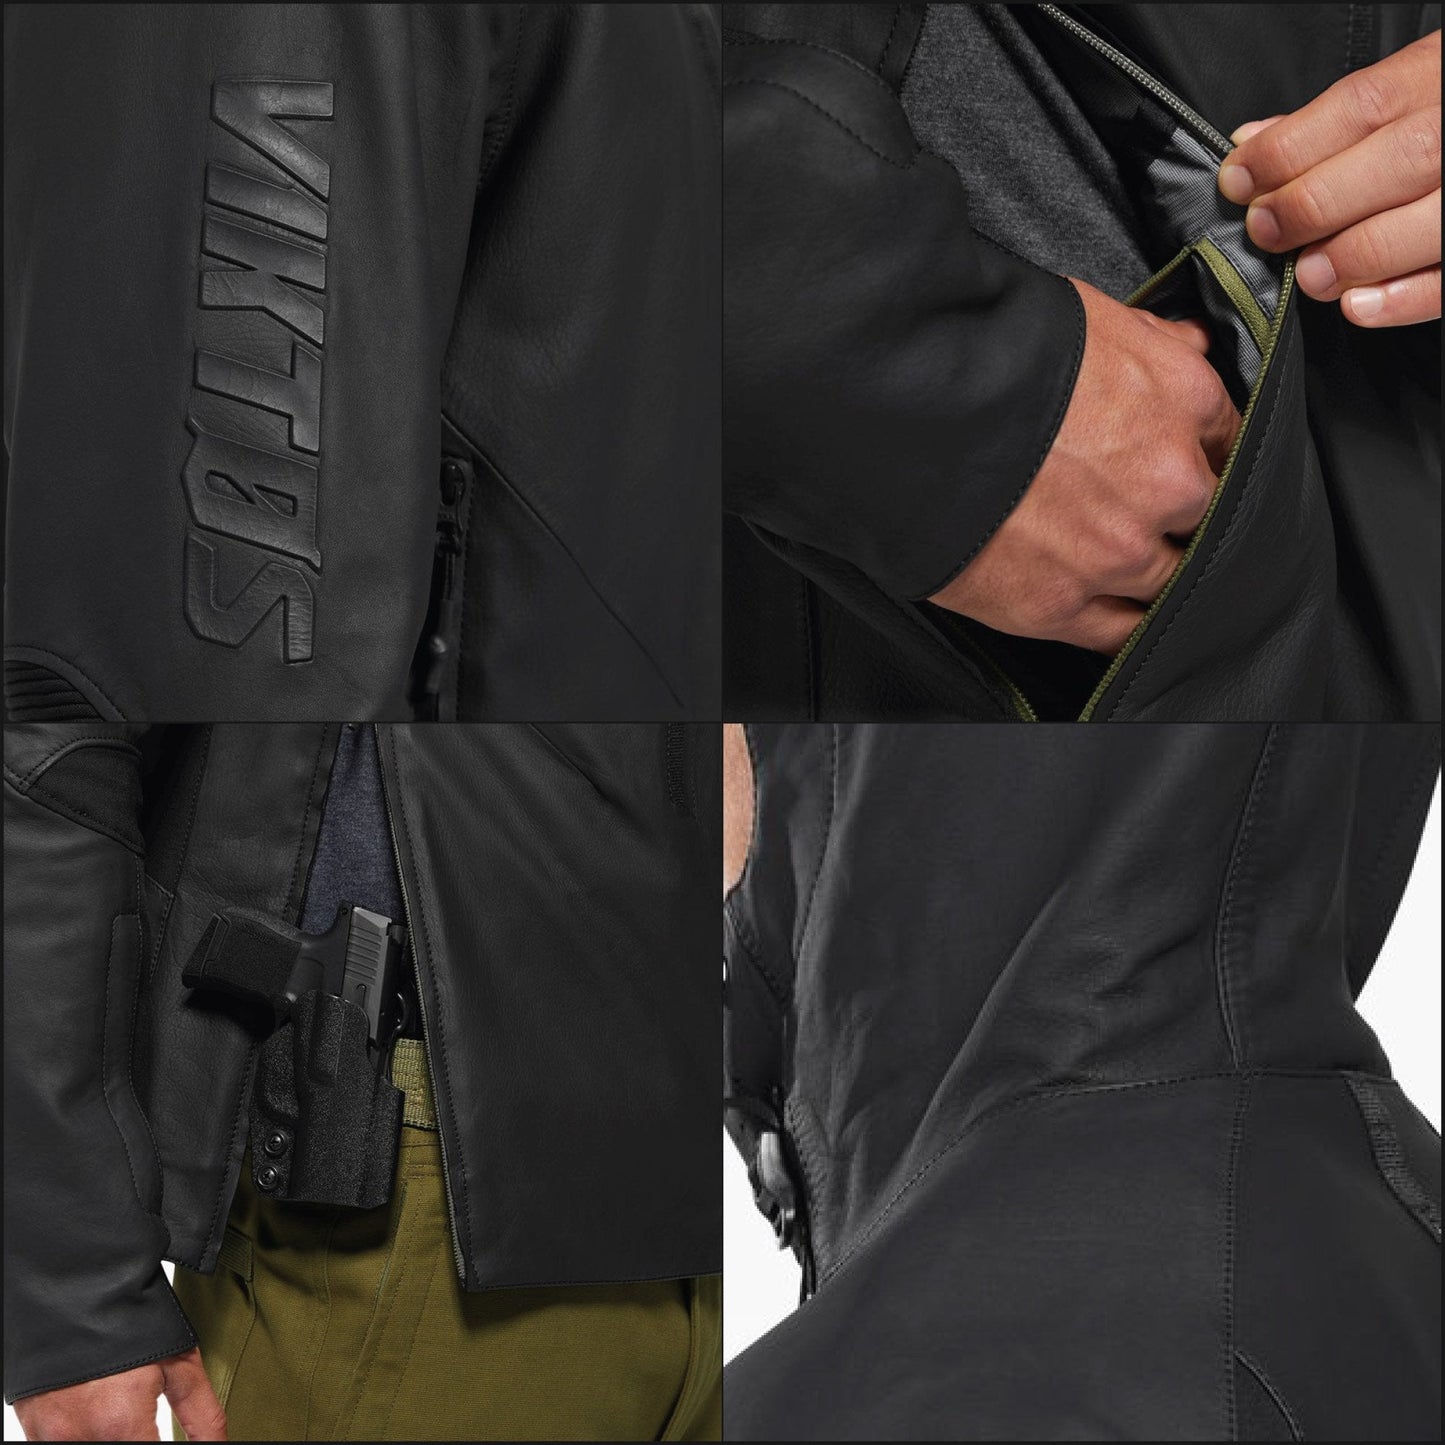 VIKTOS Actual Waterproof Leather Jacket Black Nightfjall Tactical Distributors Ltd New Zealand